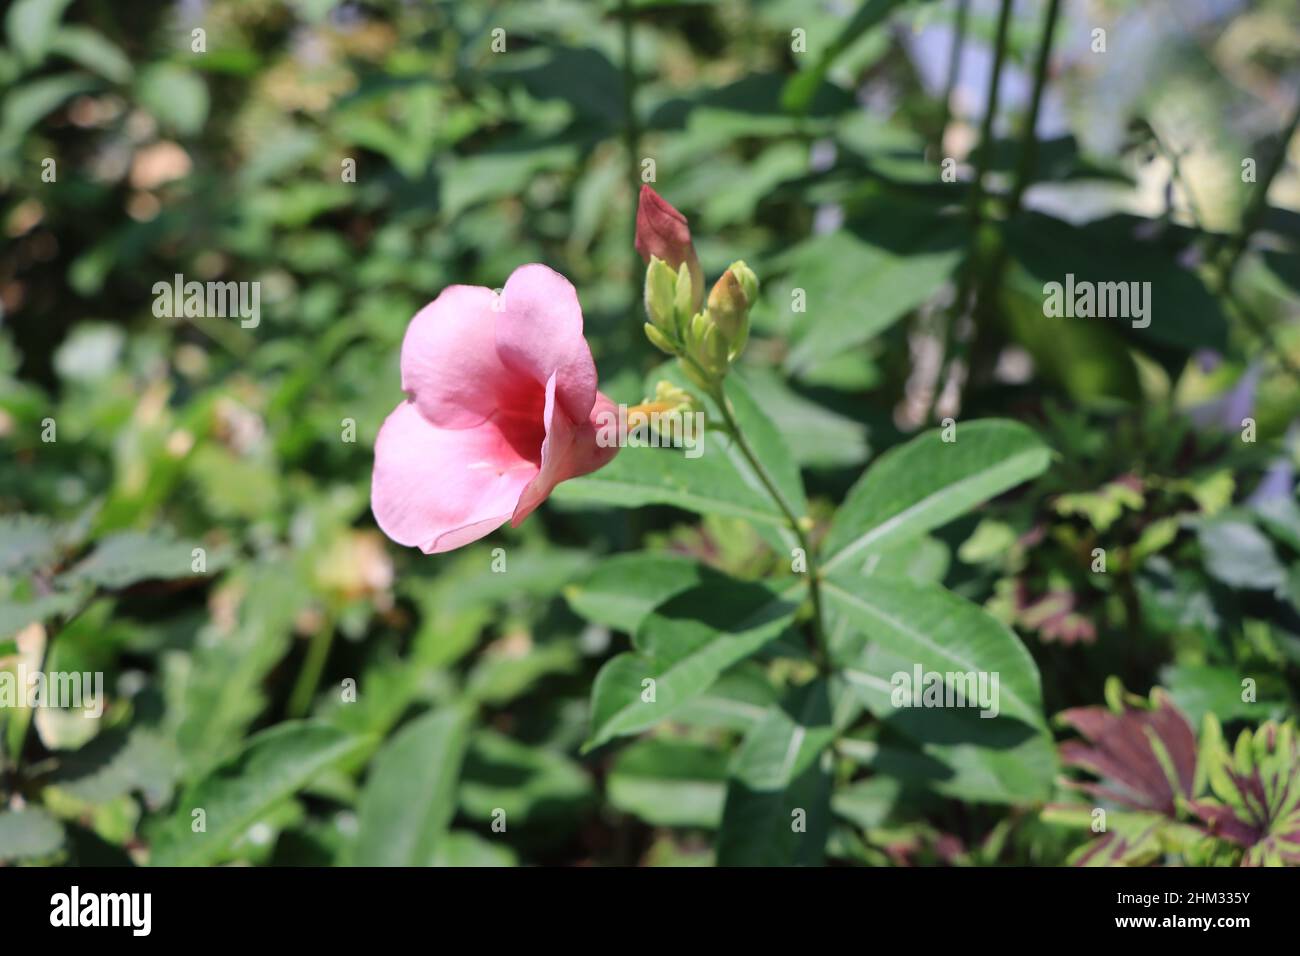 Closeup of blooming pink allamanda flower in the garden Stock Photo